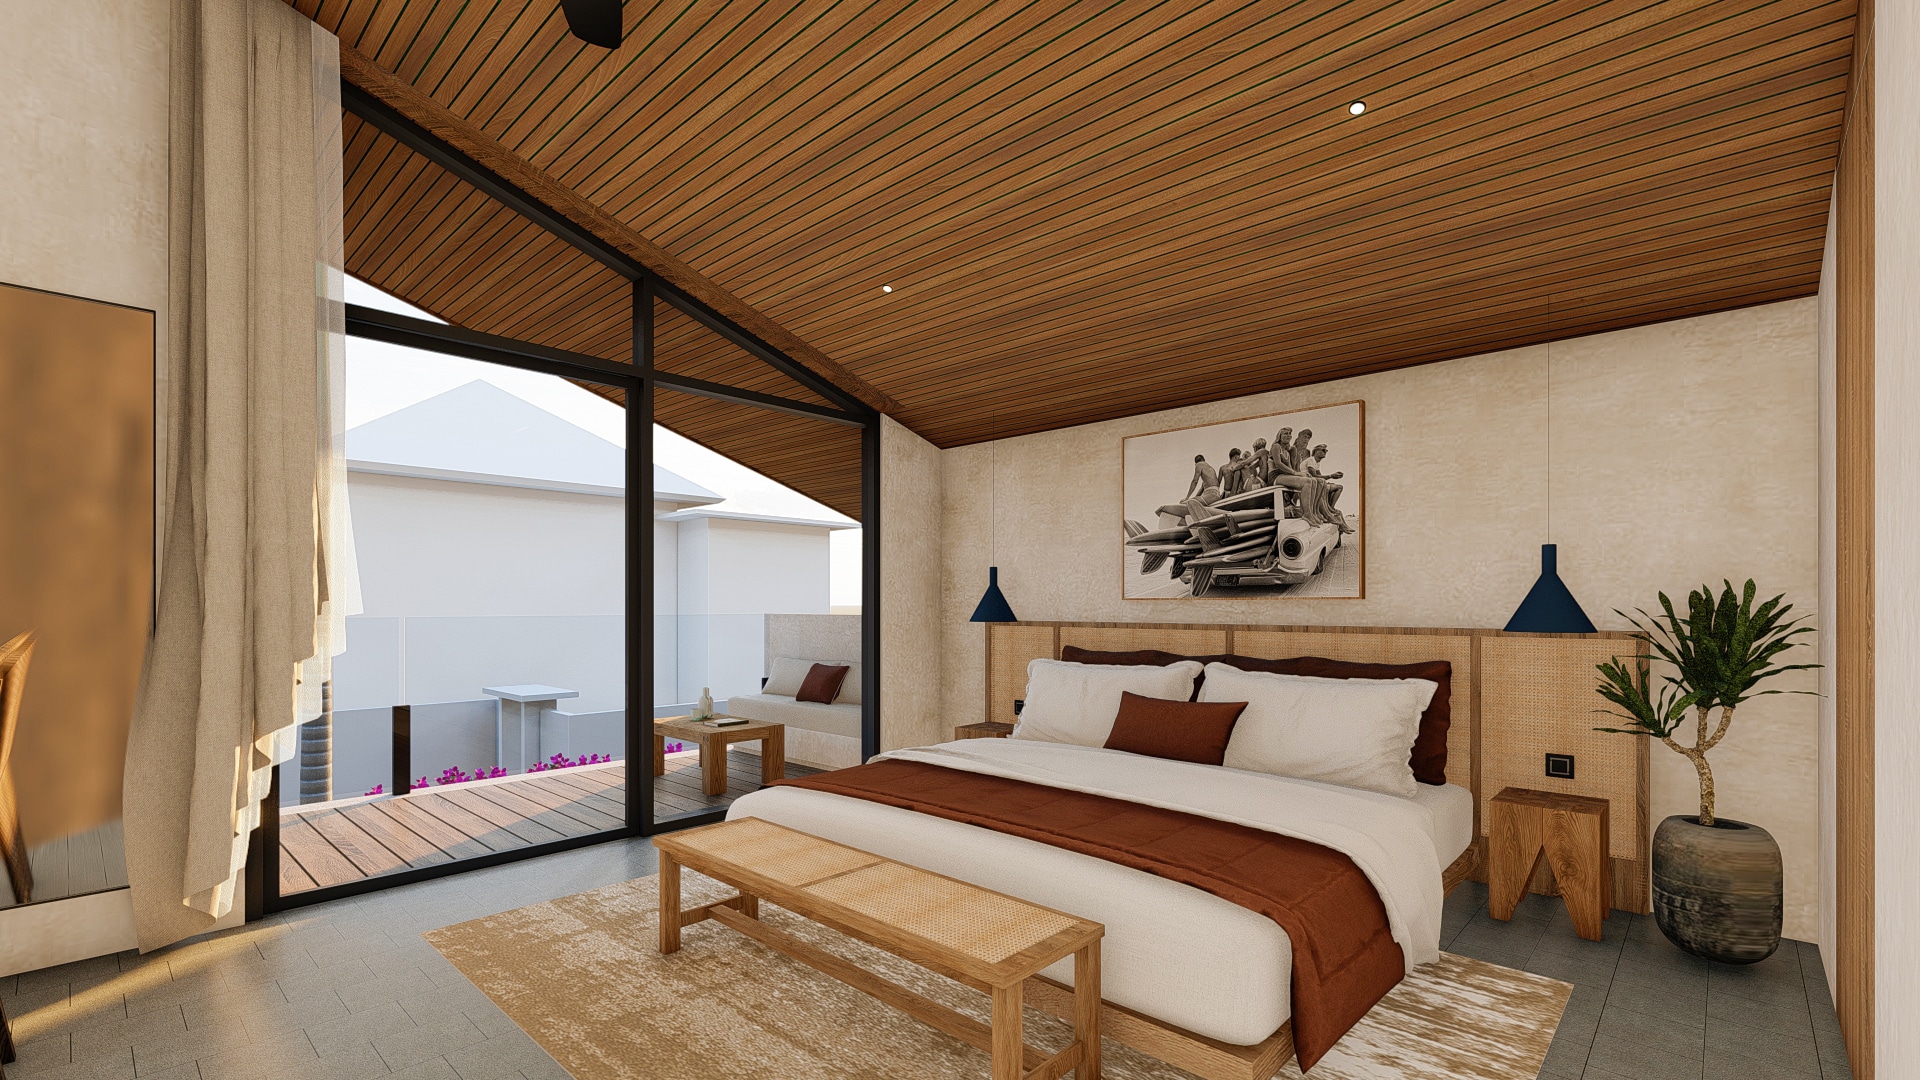 Design Assembly - MacDonald Villa - Bali Architect - Interior Design - Bali Villa - Wooden Facade - Master Bedroom